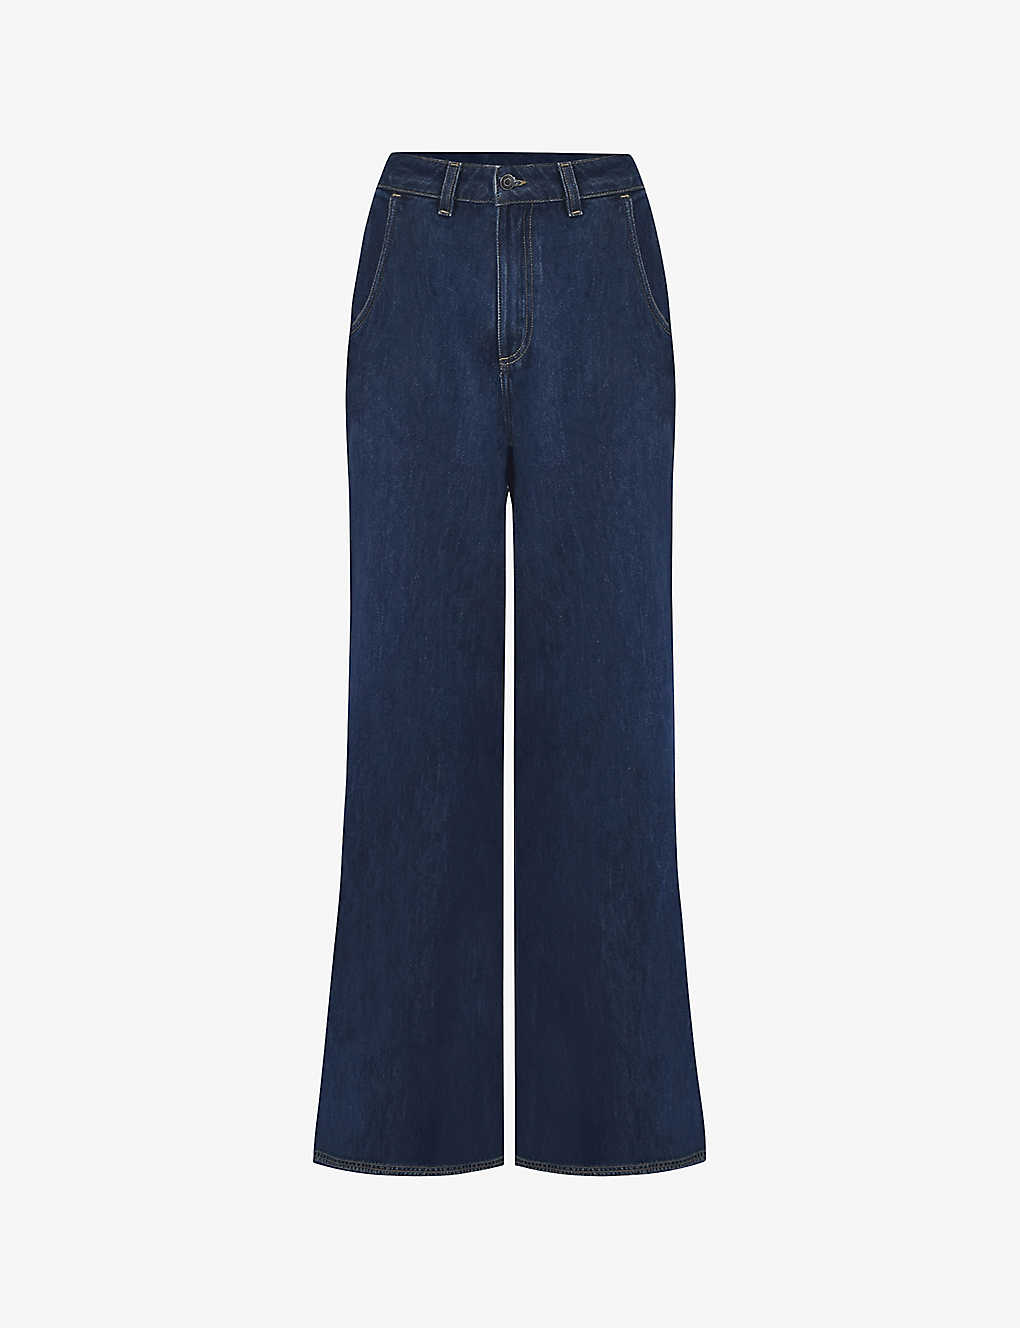 RO&ZO - High-rise wide-leg organic-cotton denim jeans | Selfridges.com